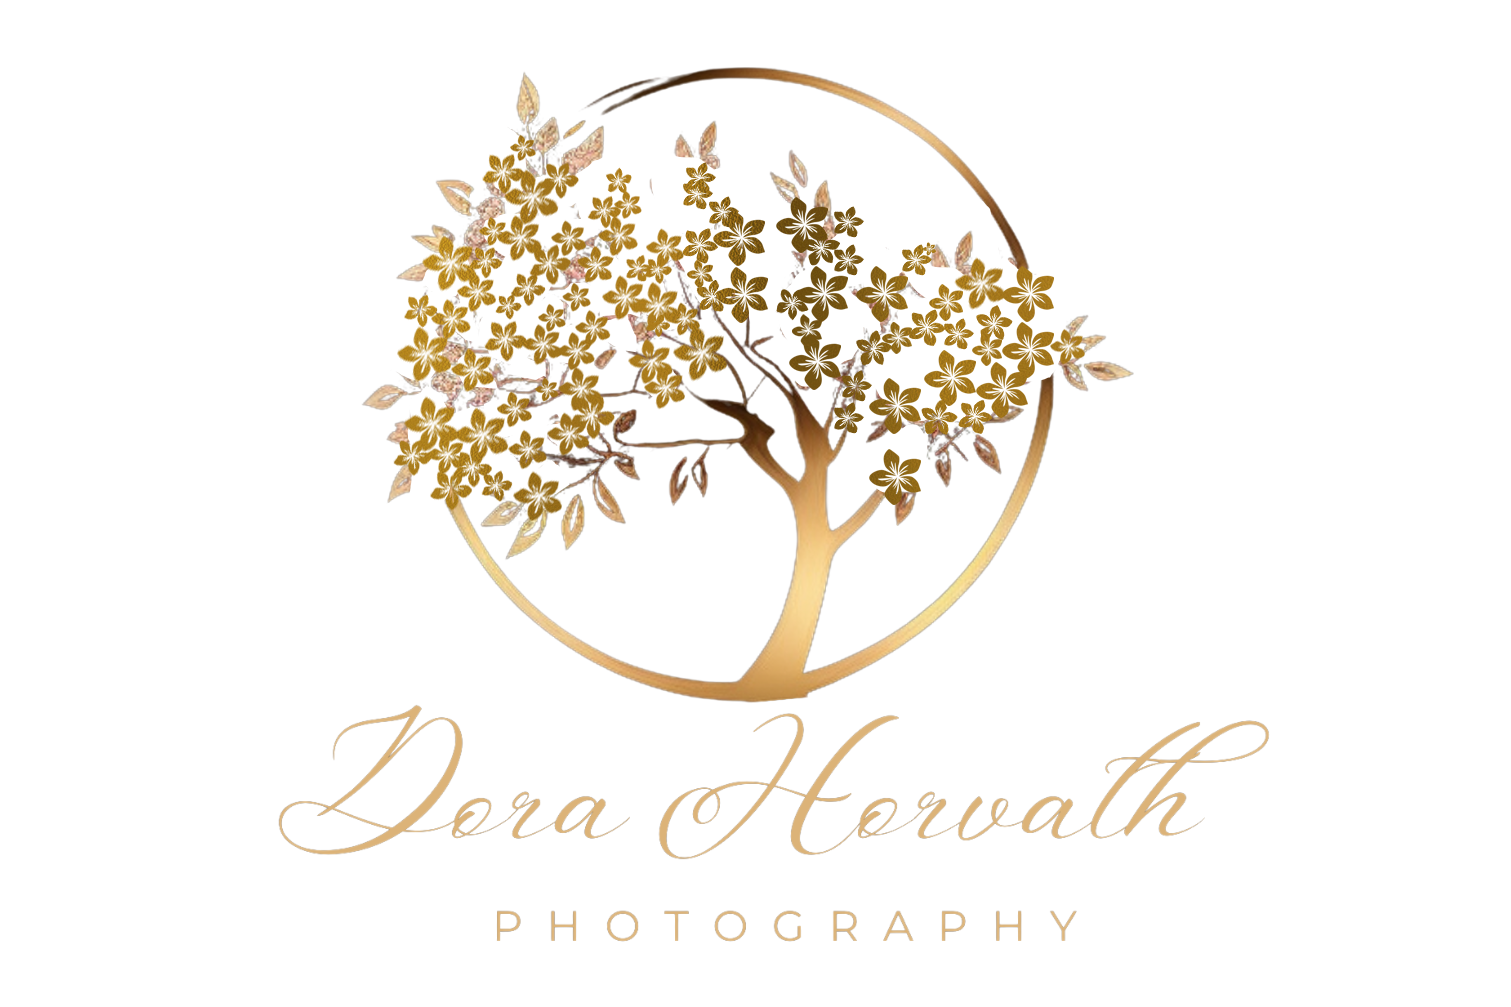 Dora Horvath Photography